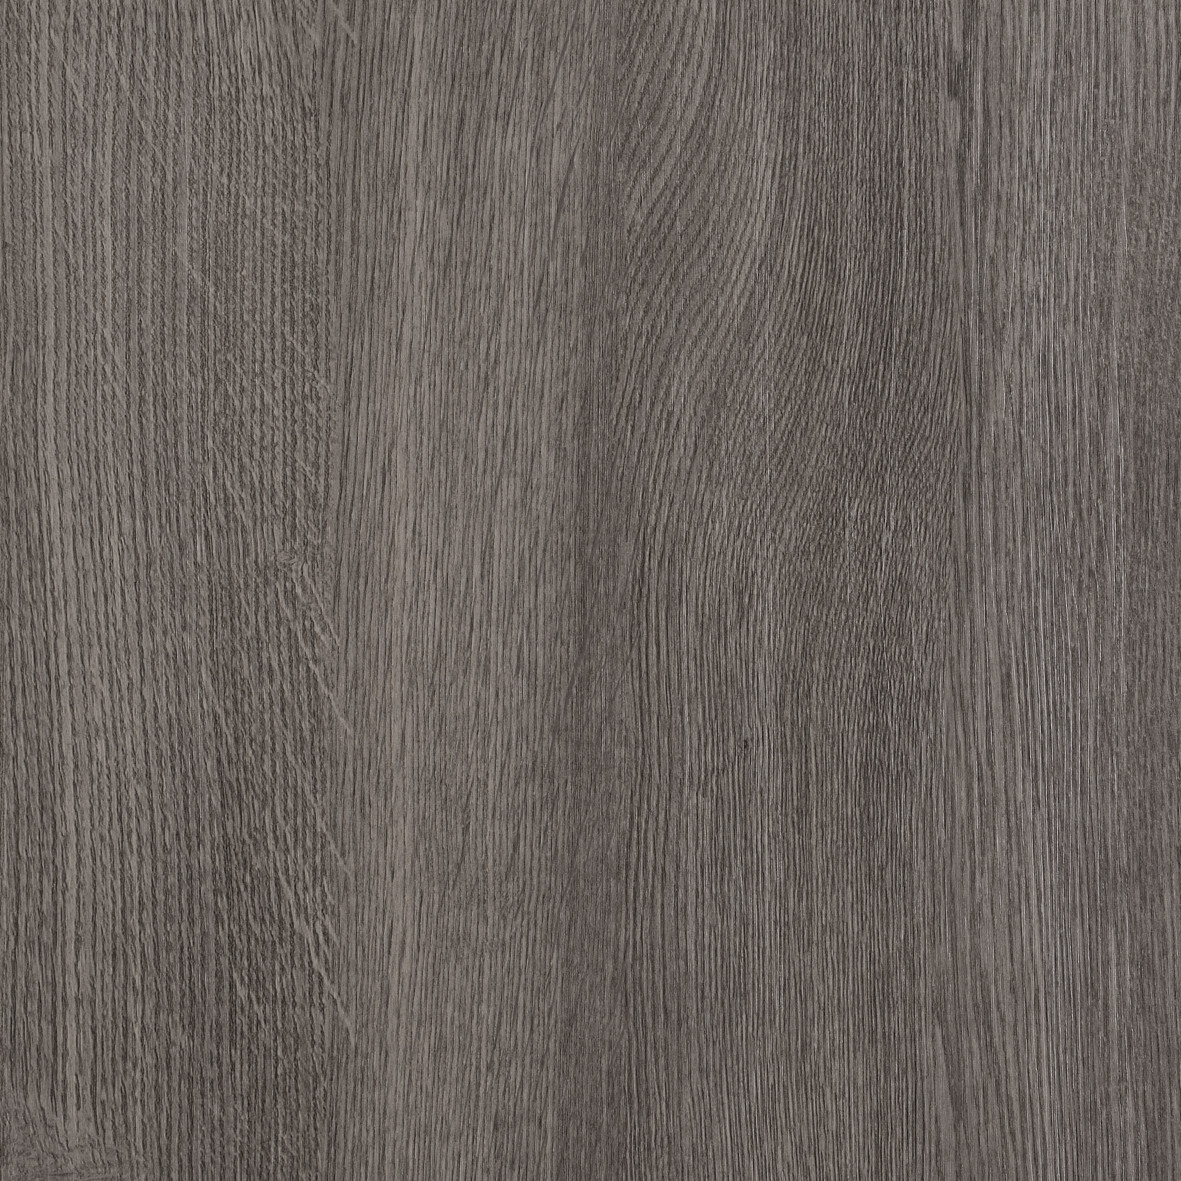 Gerflor PVC DesignTime Oak tmavý 5215 2m tloušťka 2,0mm nášlap 0,55 mm